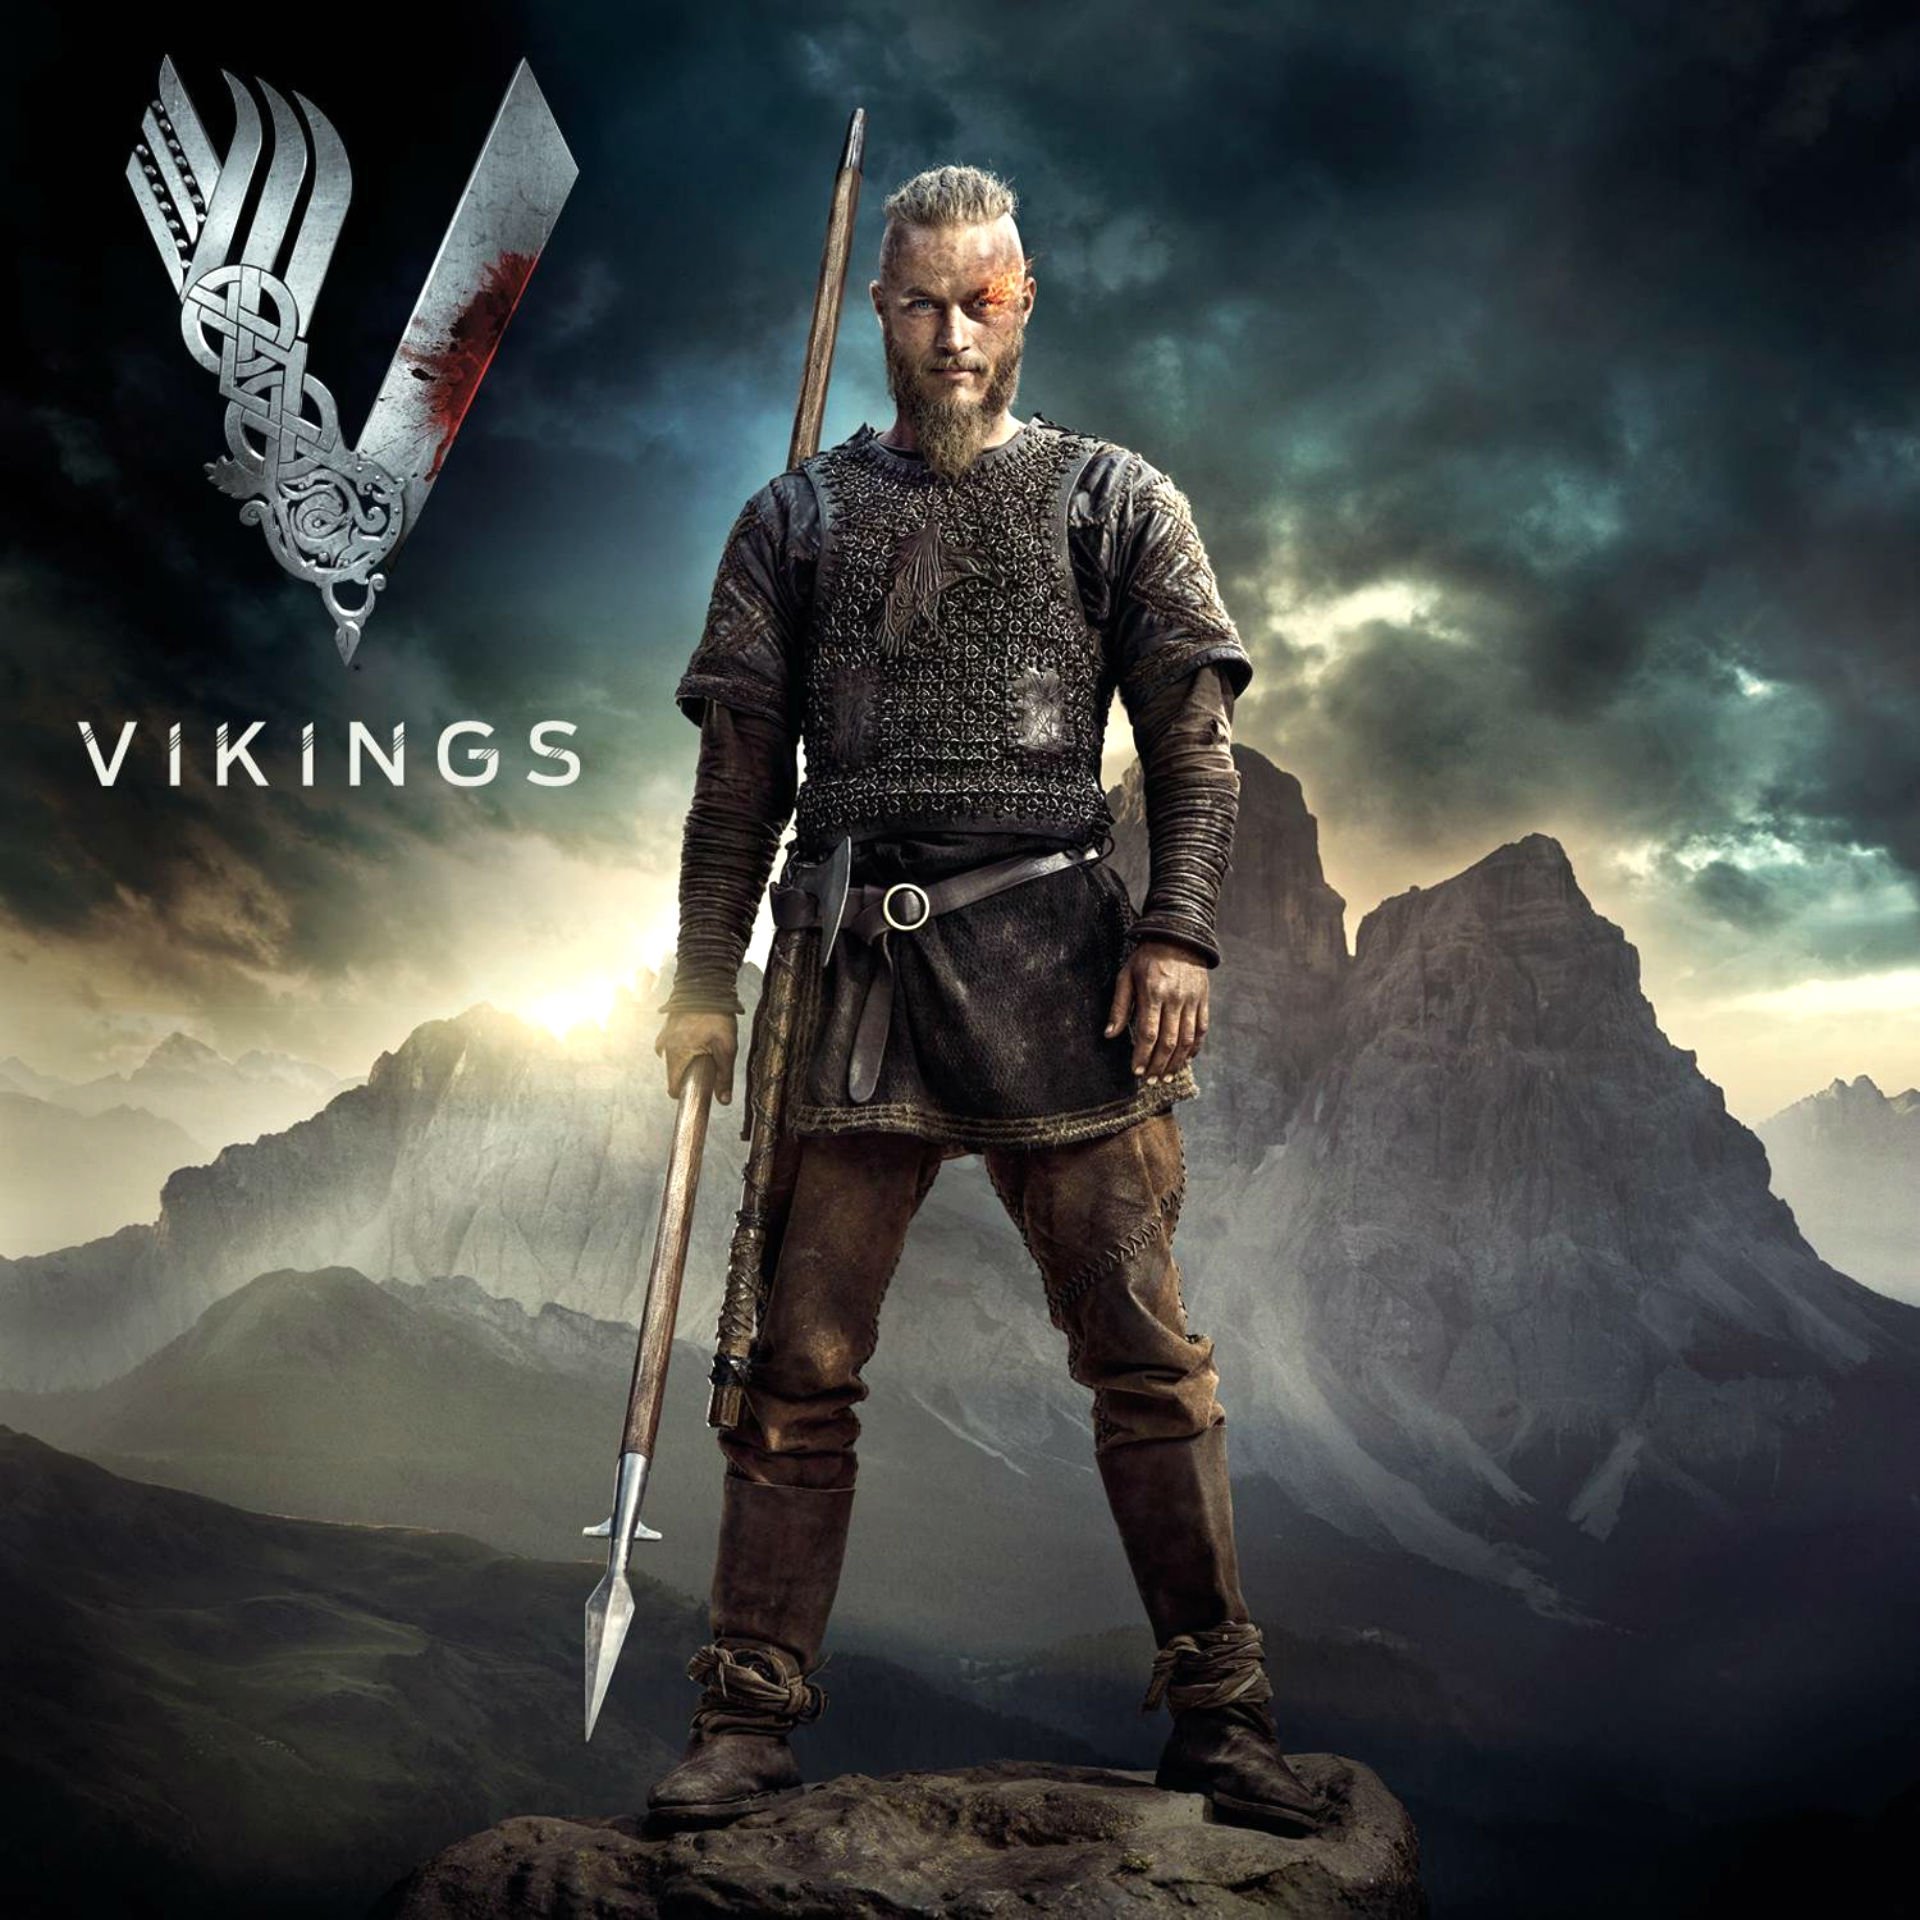 VIKINGS action drama history fantasy adventure series 1vikings viking